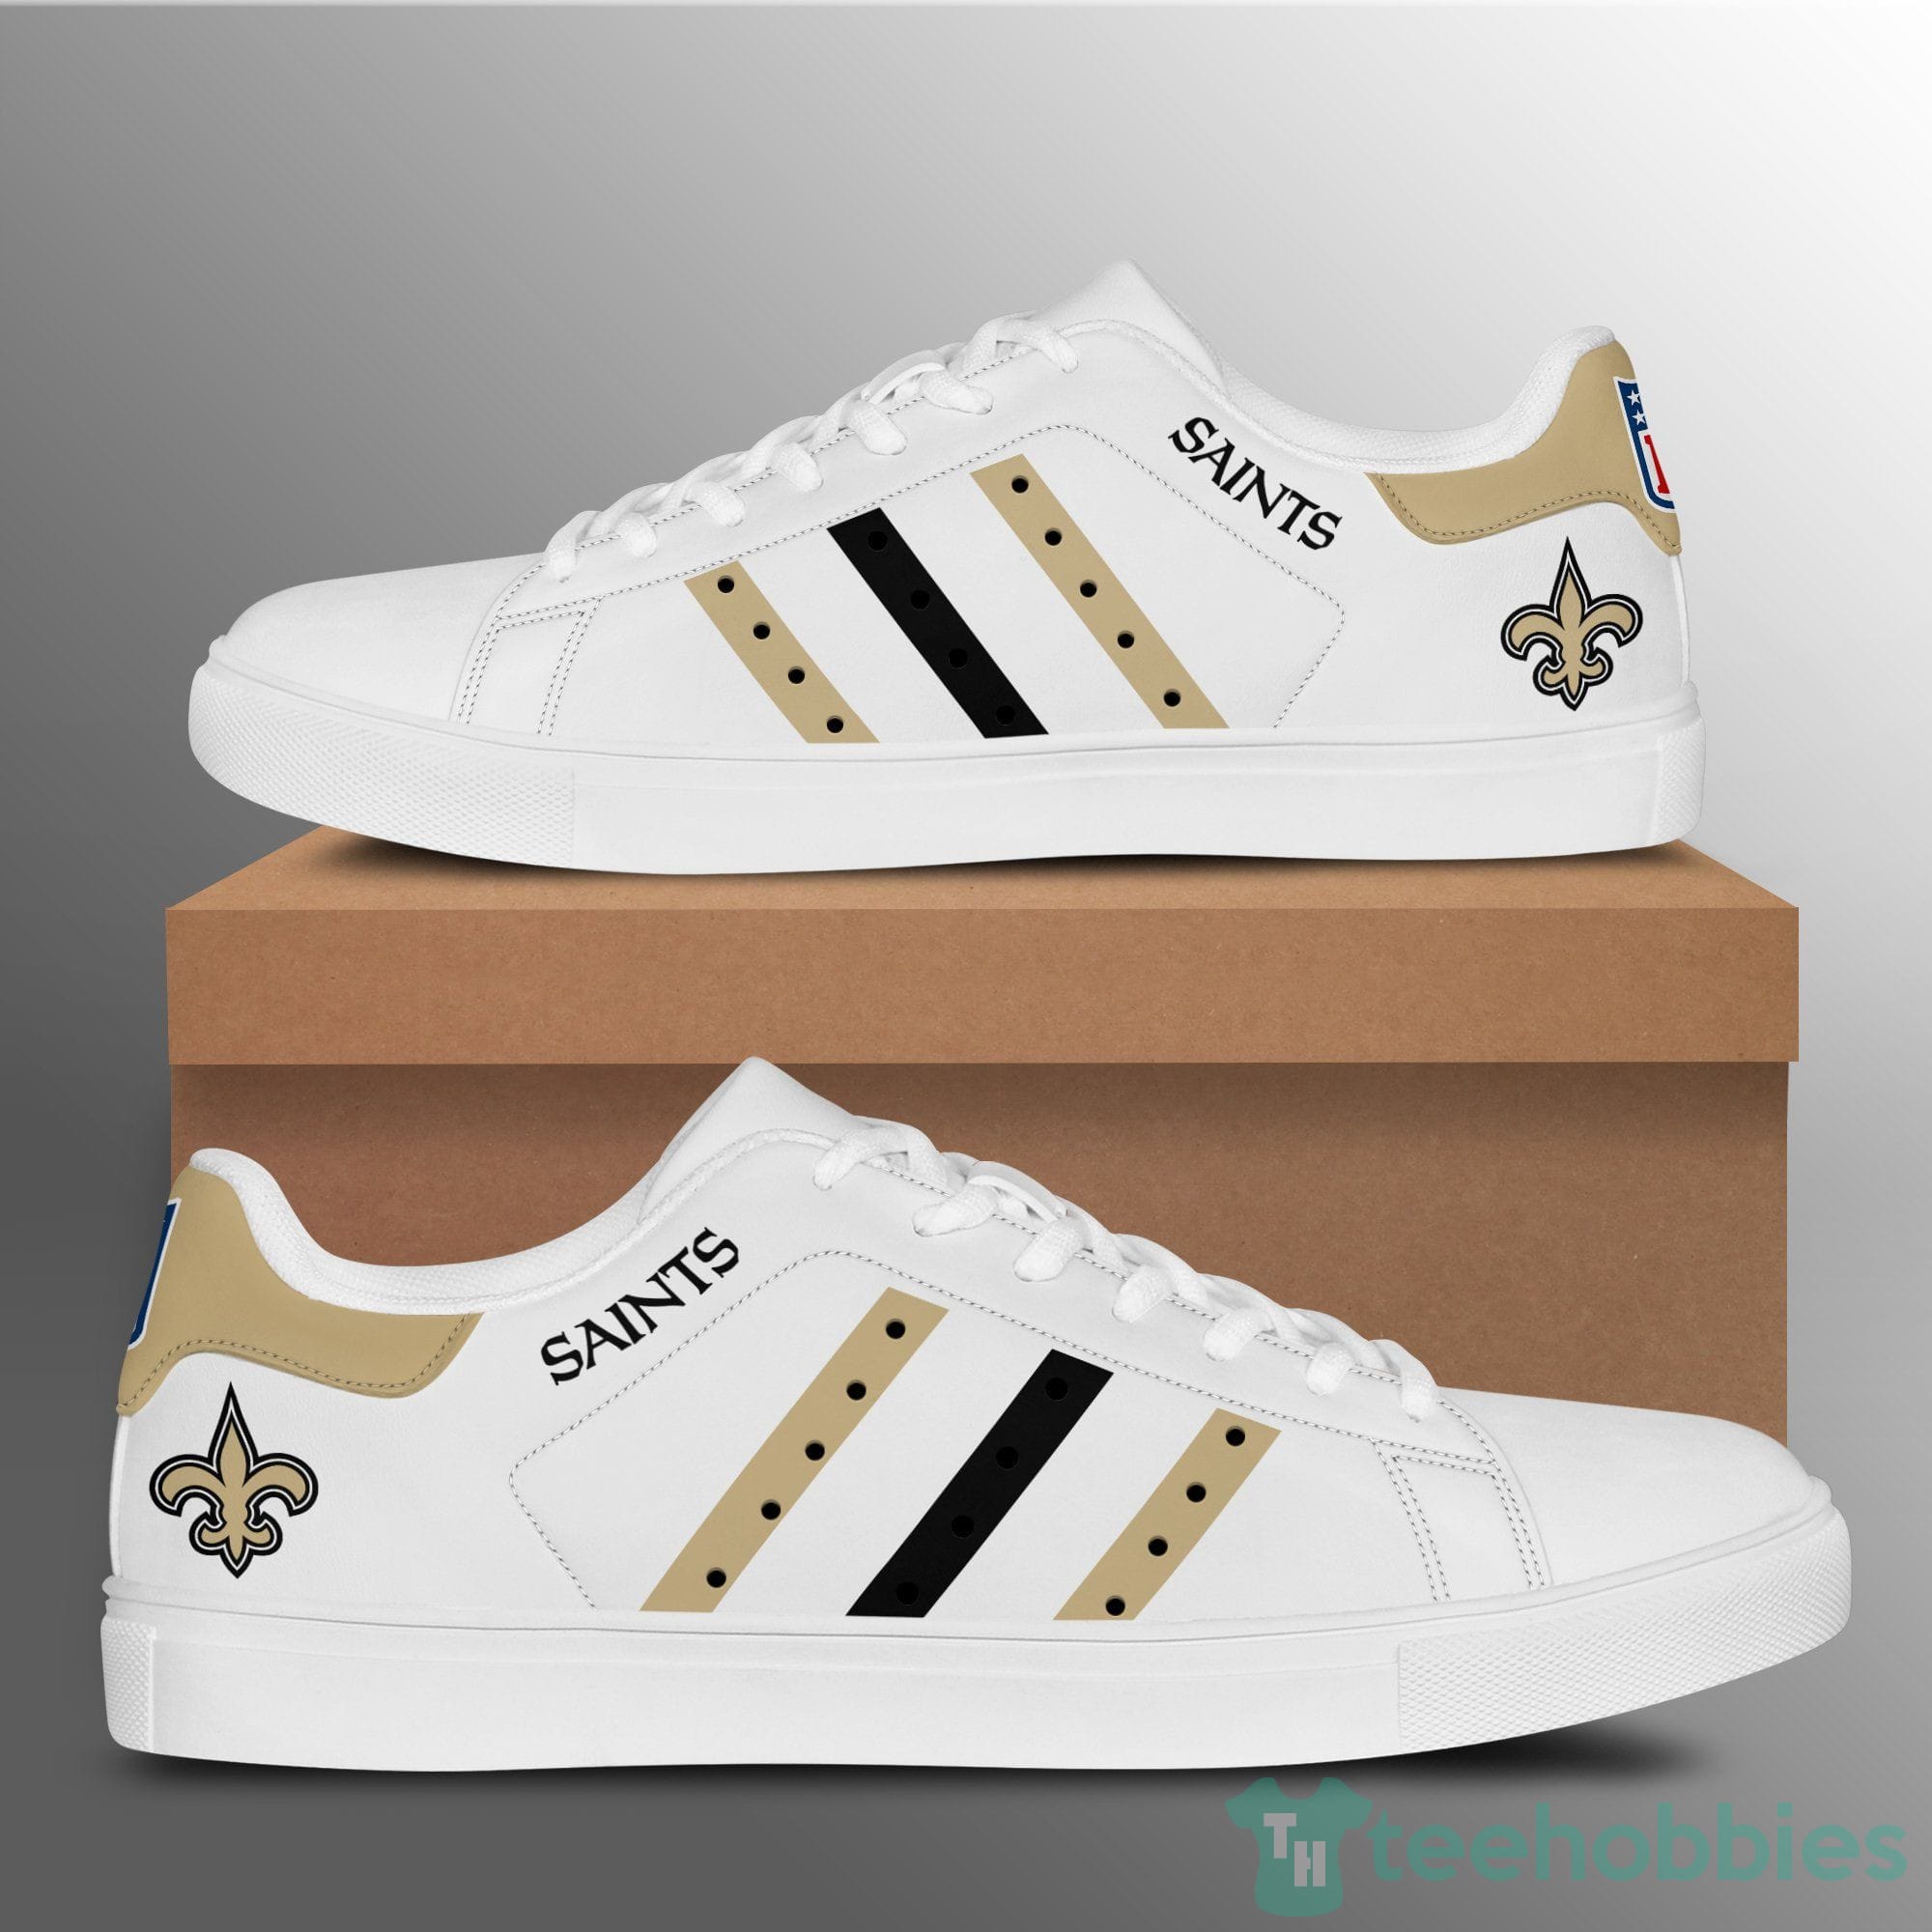 New Orleans Saints White Low Top Skate Shoes